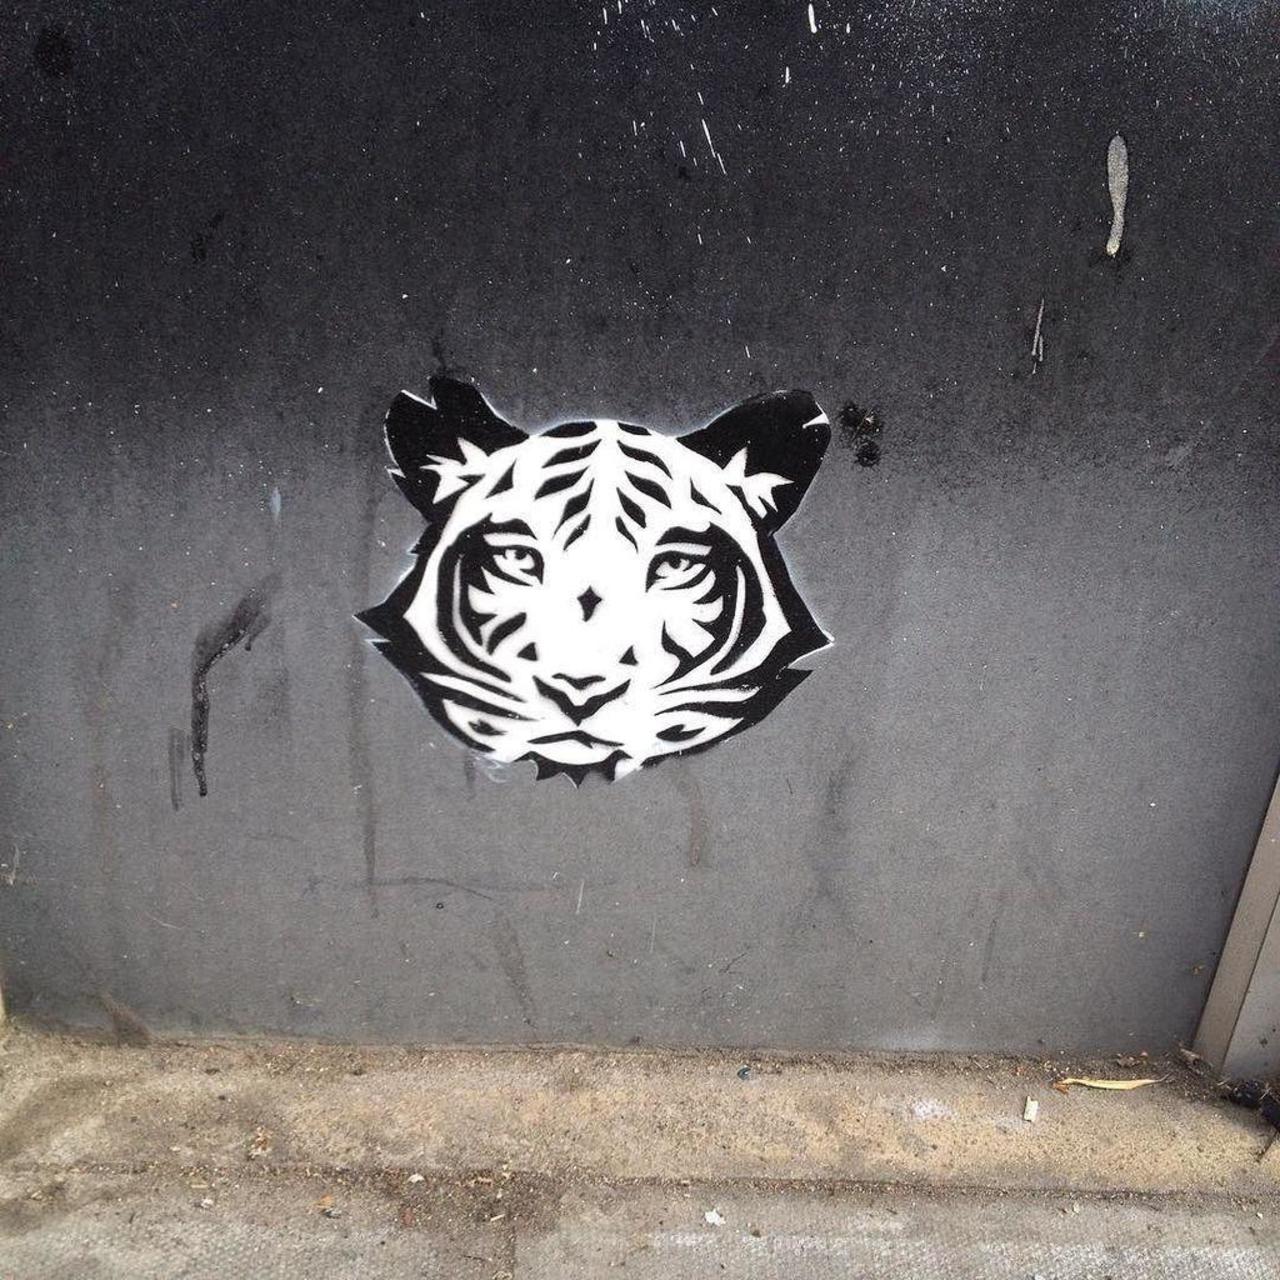 Tiger.  #streetart #graffiti #streetartlondon #london #thisislondon by isadarko http://t.co/prMiyHYCZS